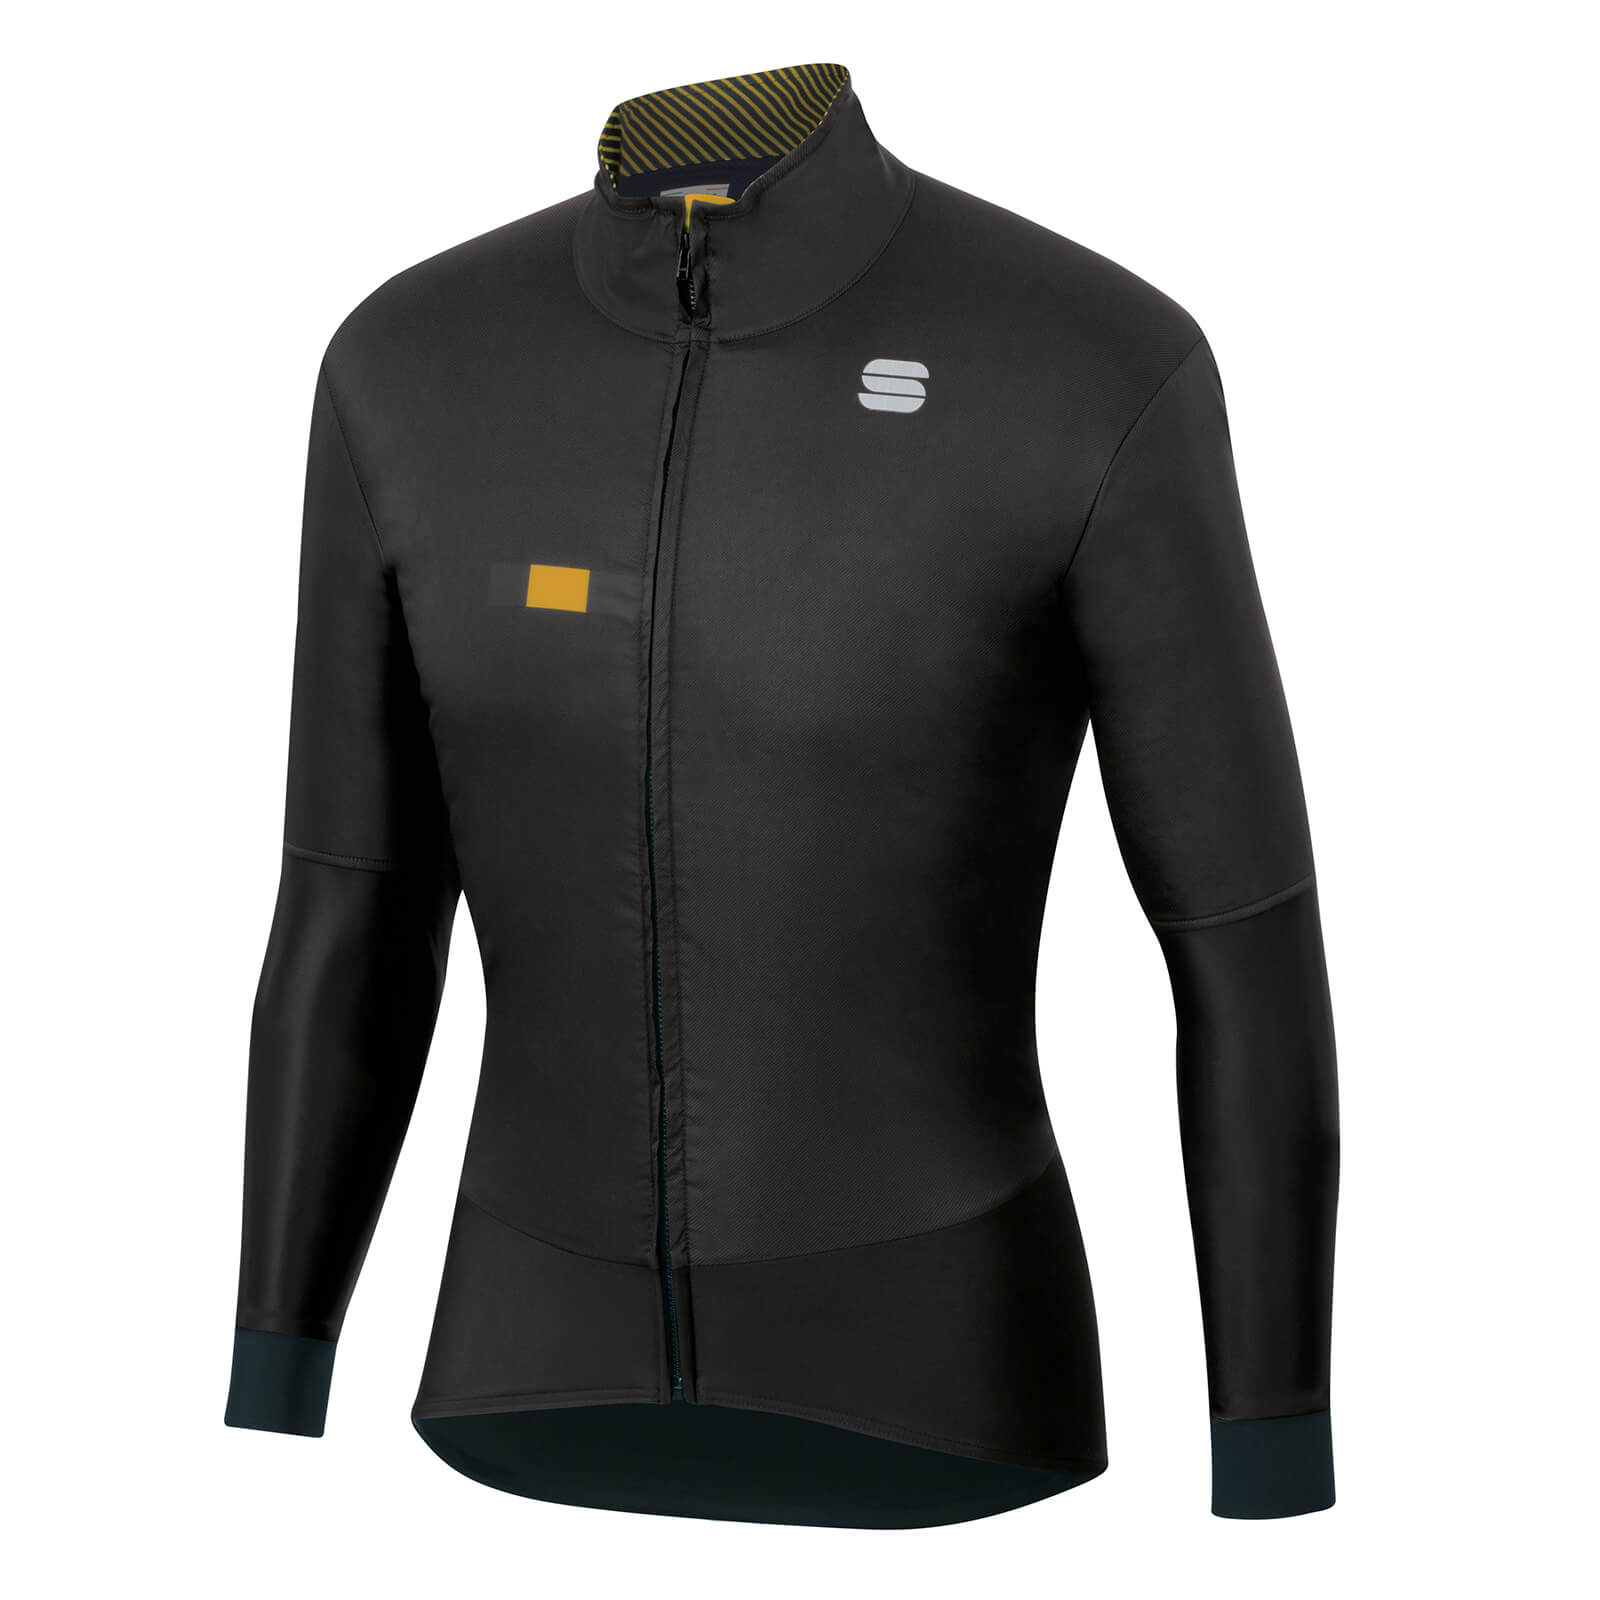 Sportful Bodyfit Pro Jacket - M - Black/Gold